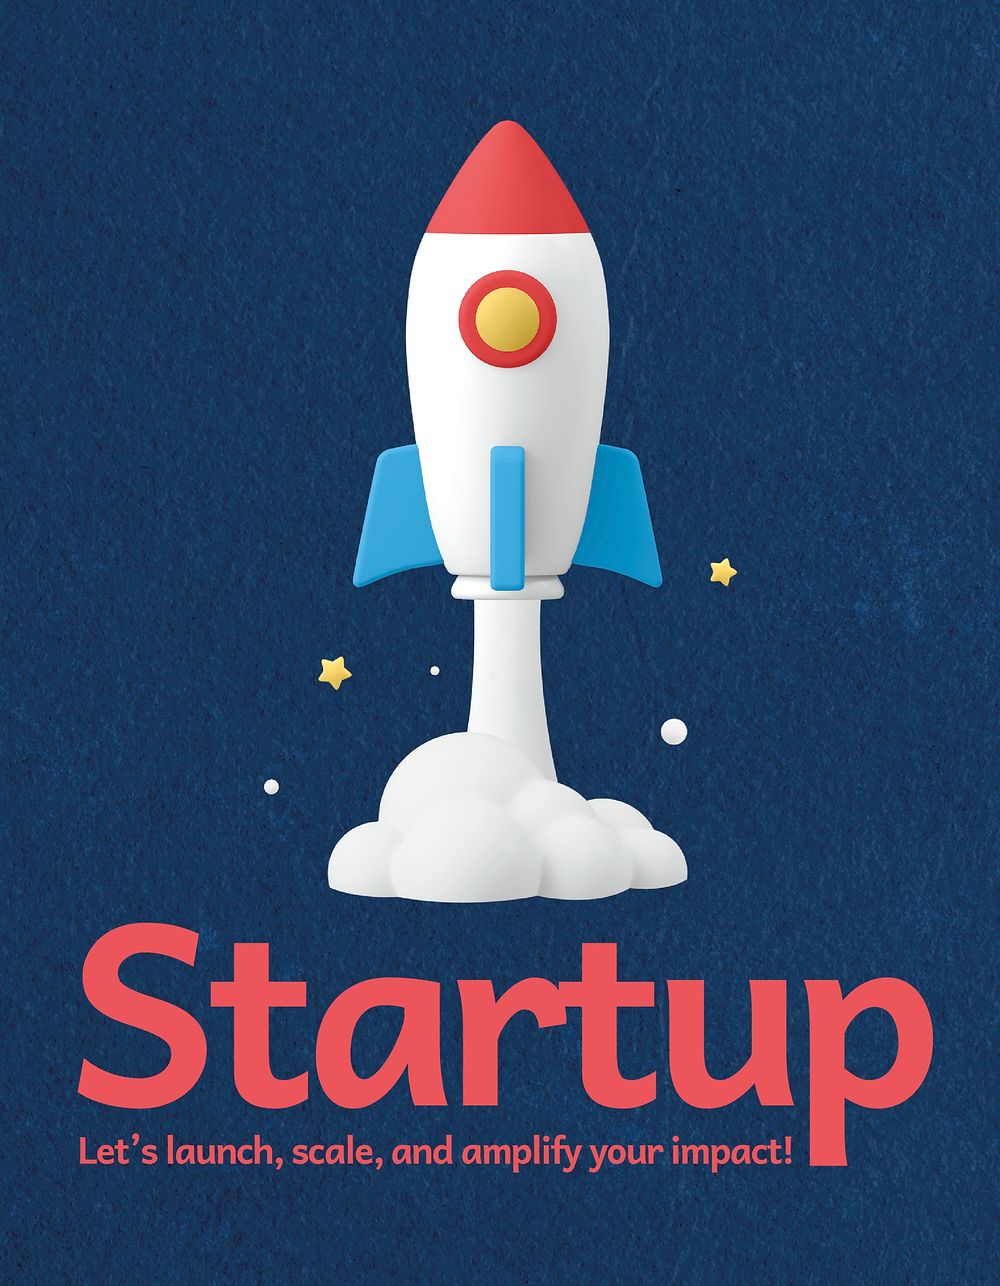 Startup business flyer template, rocket launch 3D illustration vector